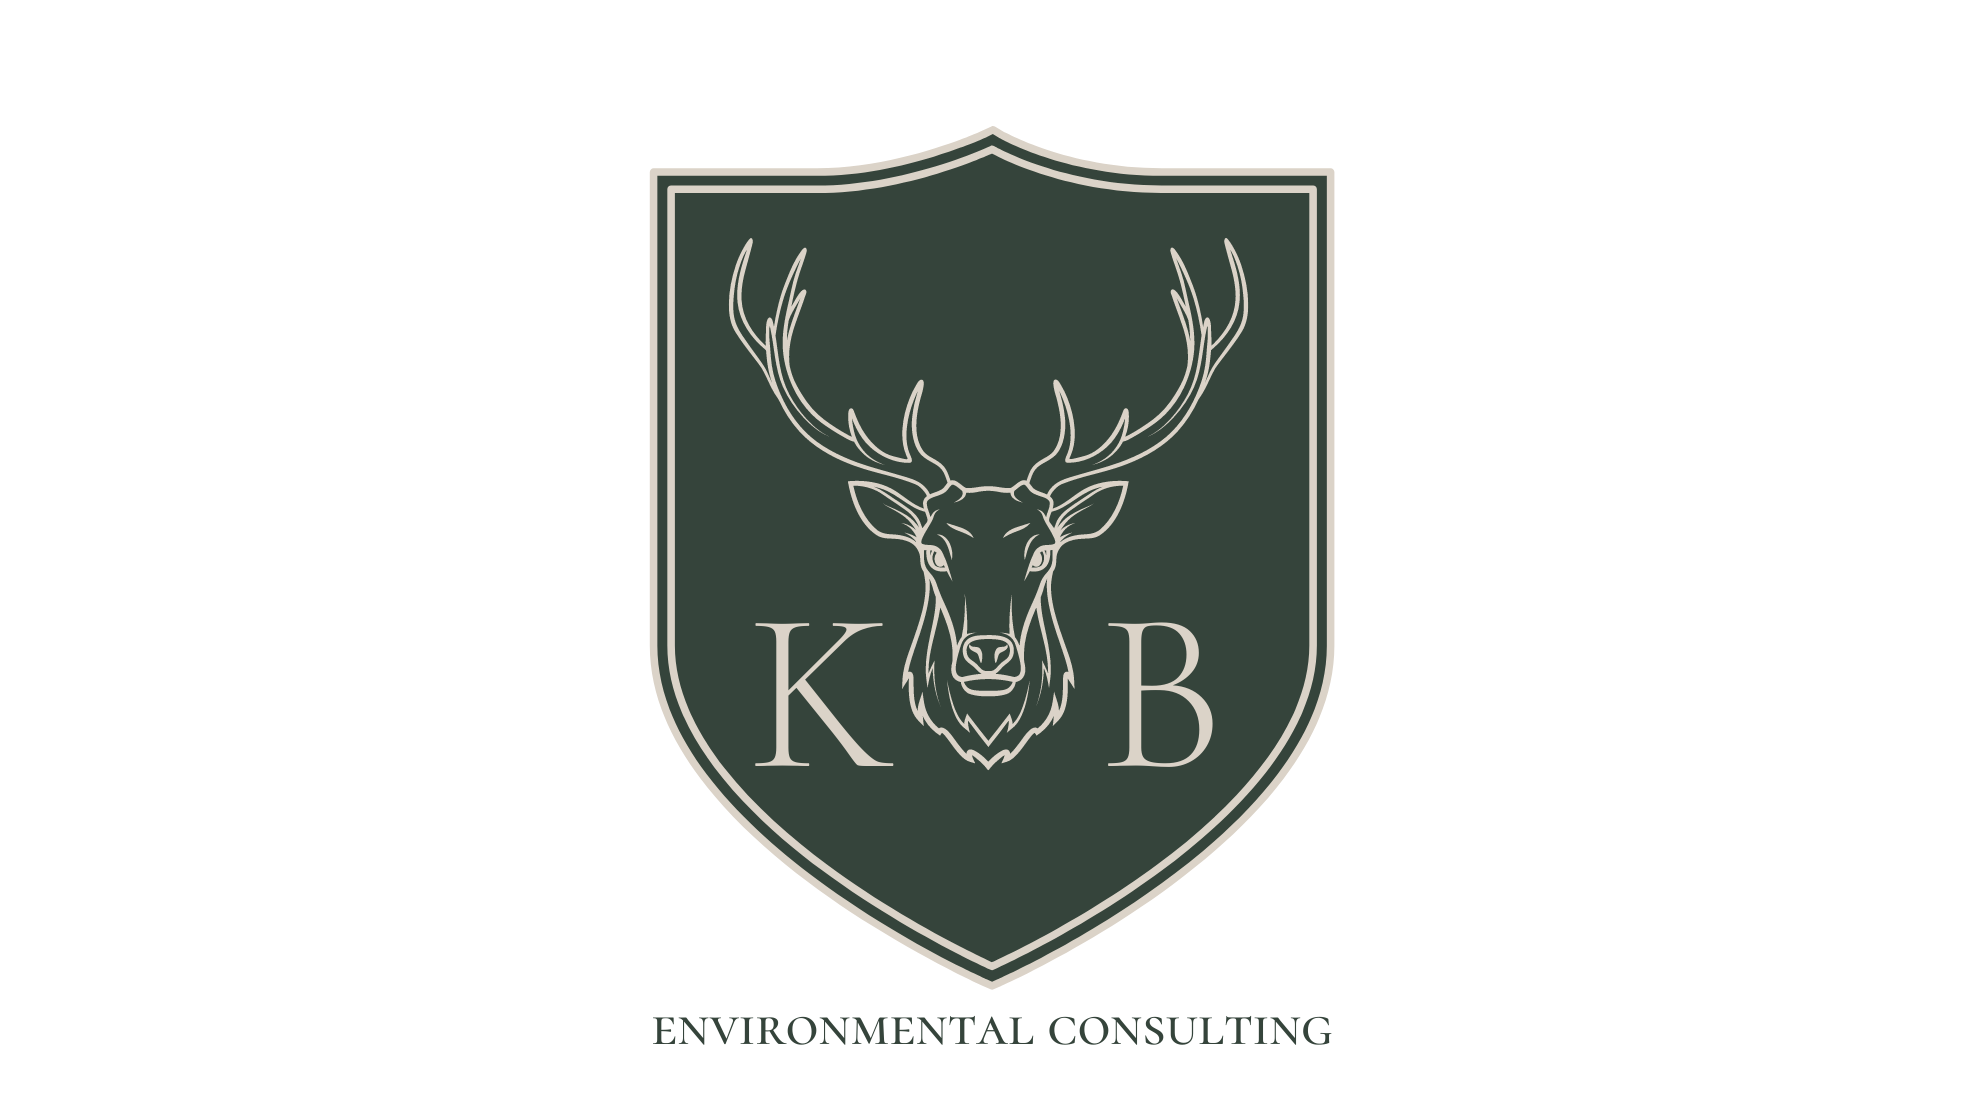 KB Environmental Consulting Limited - Wigan, Lancashire WN6 9SB - 01257 696014 | ShowMeLocal.com